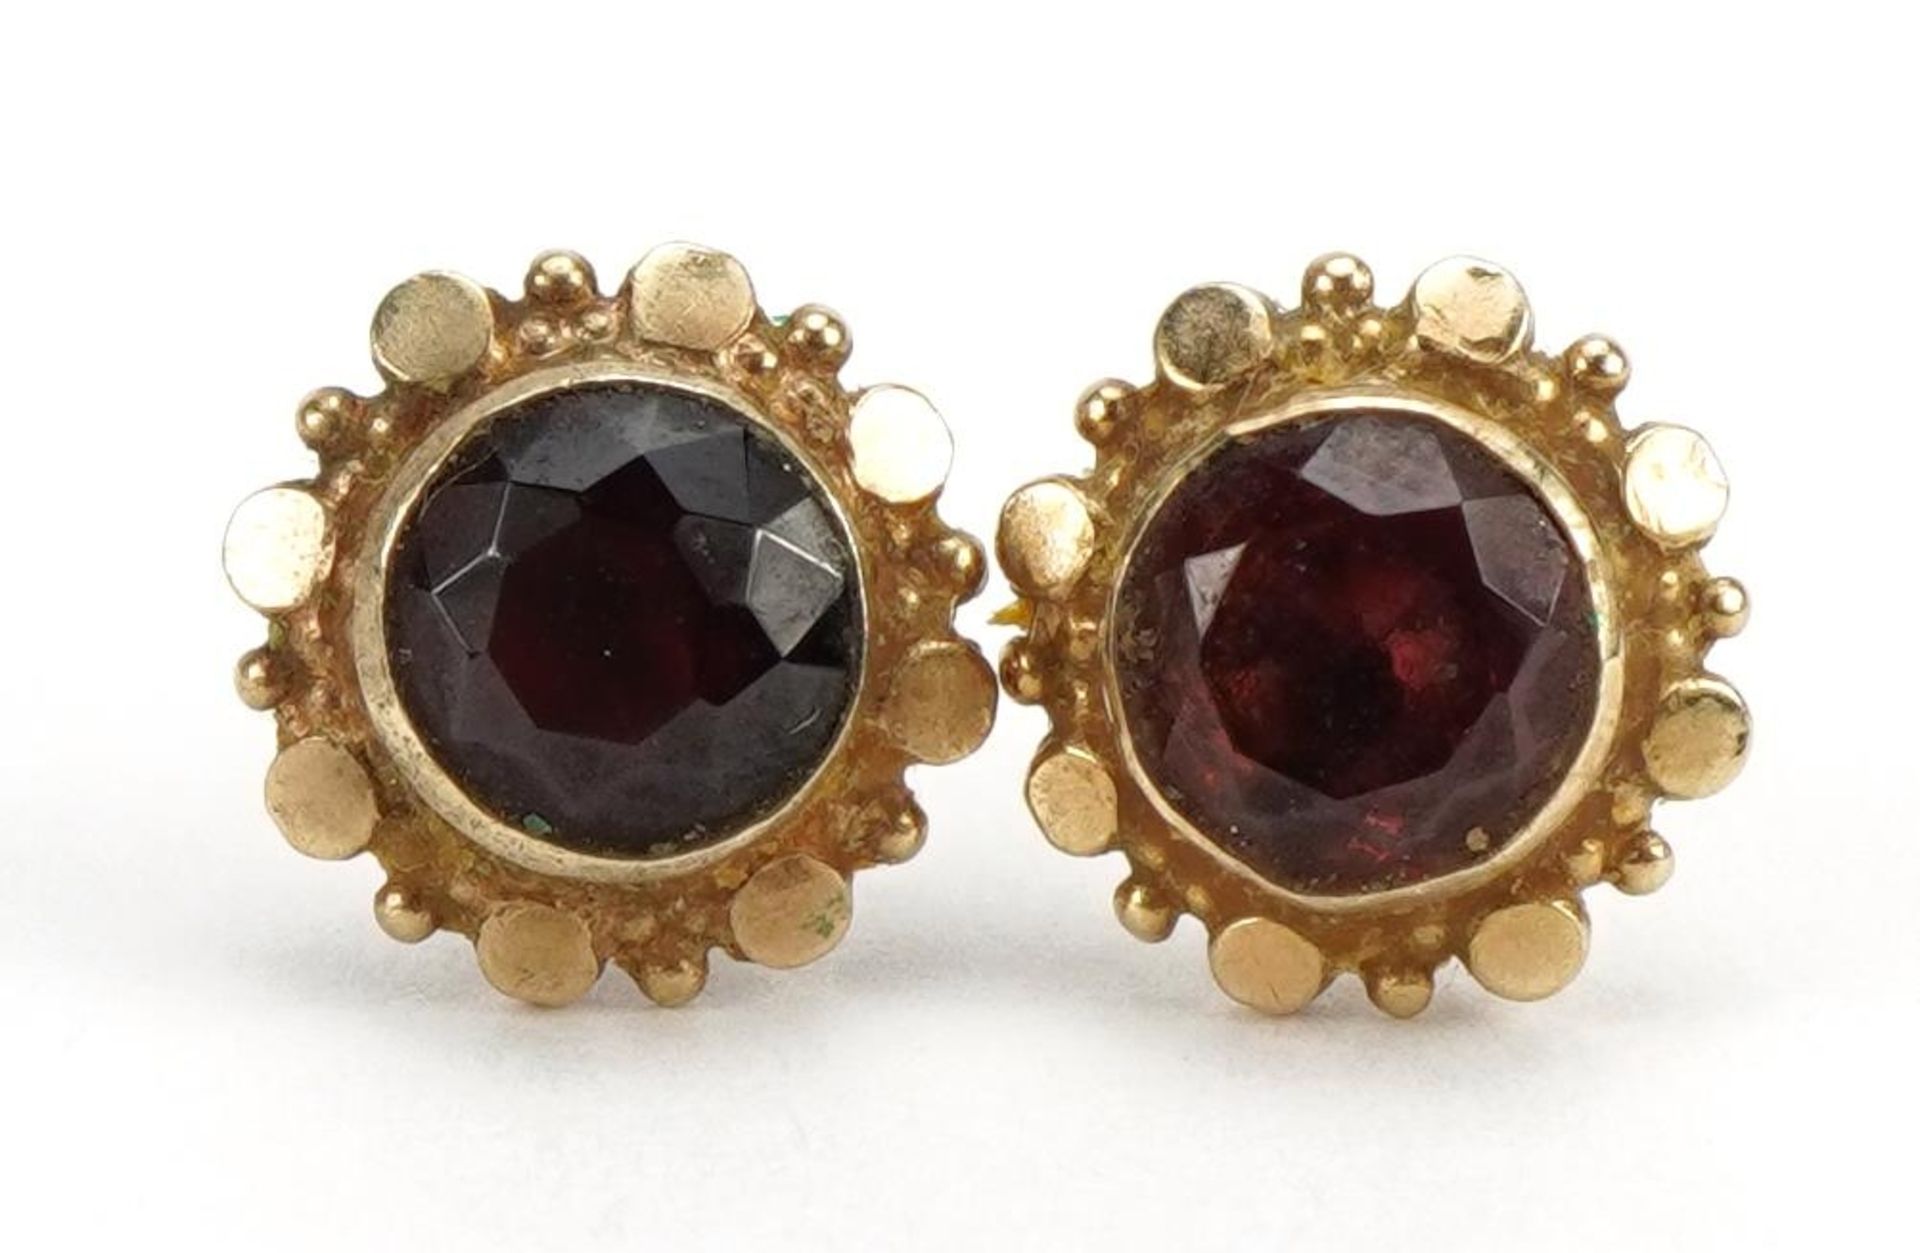 Pair of unmarked gold garnet stud earrings, 1.0cm high, 1.7g